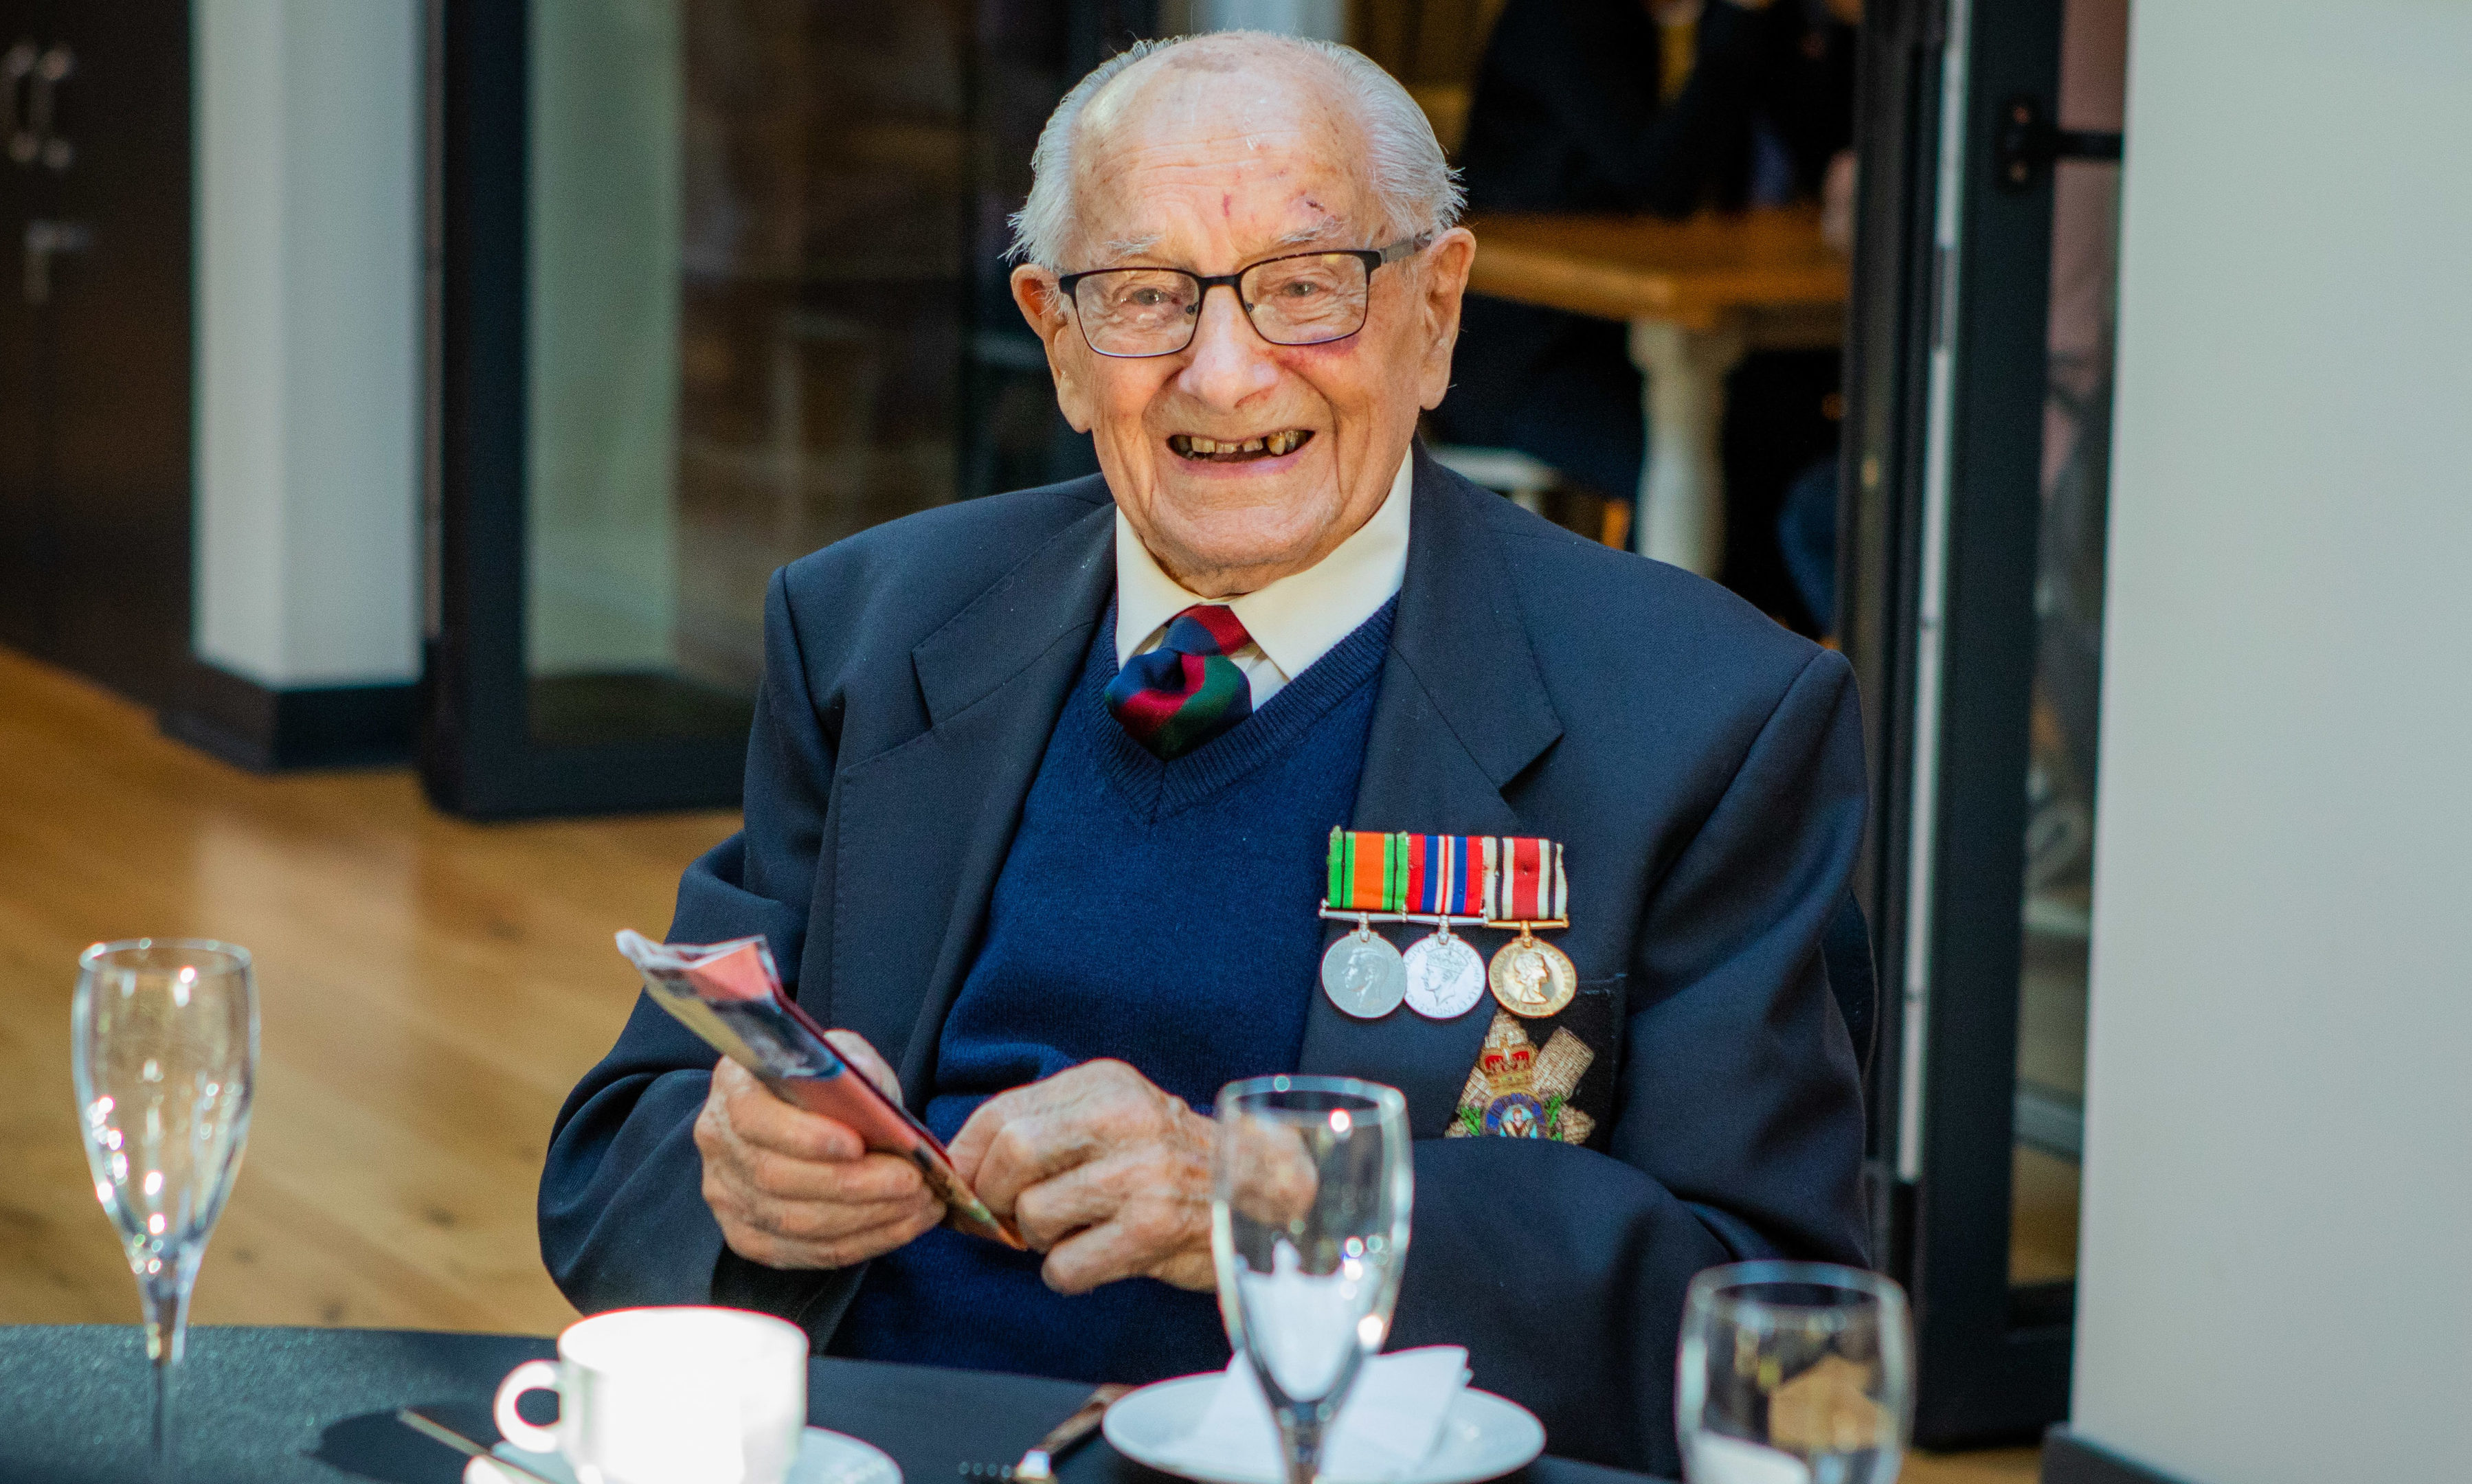 Georgie Reid celebrating his 100th birthday at The Black Watch museum